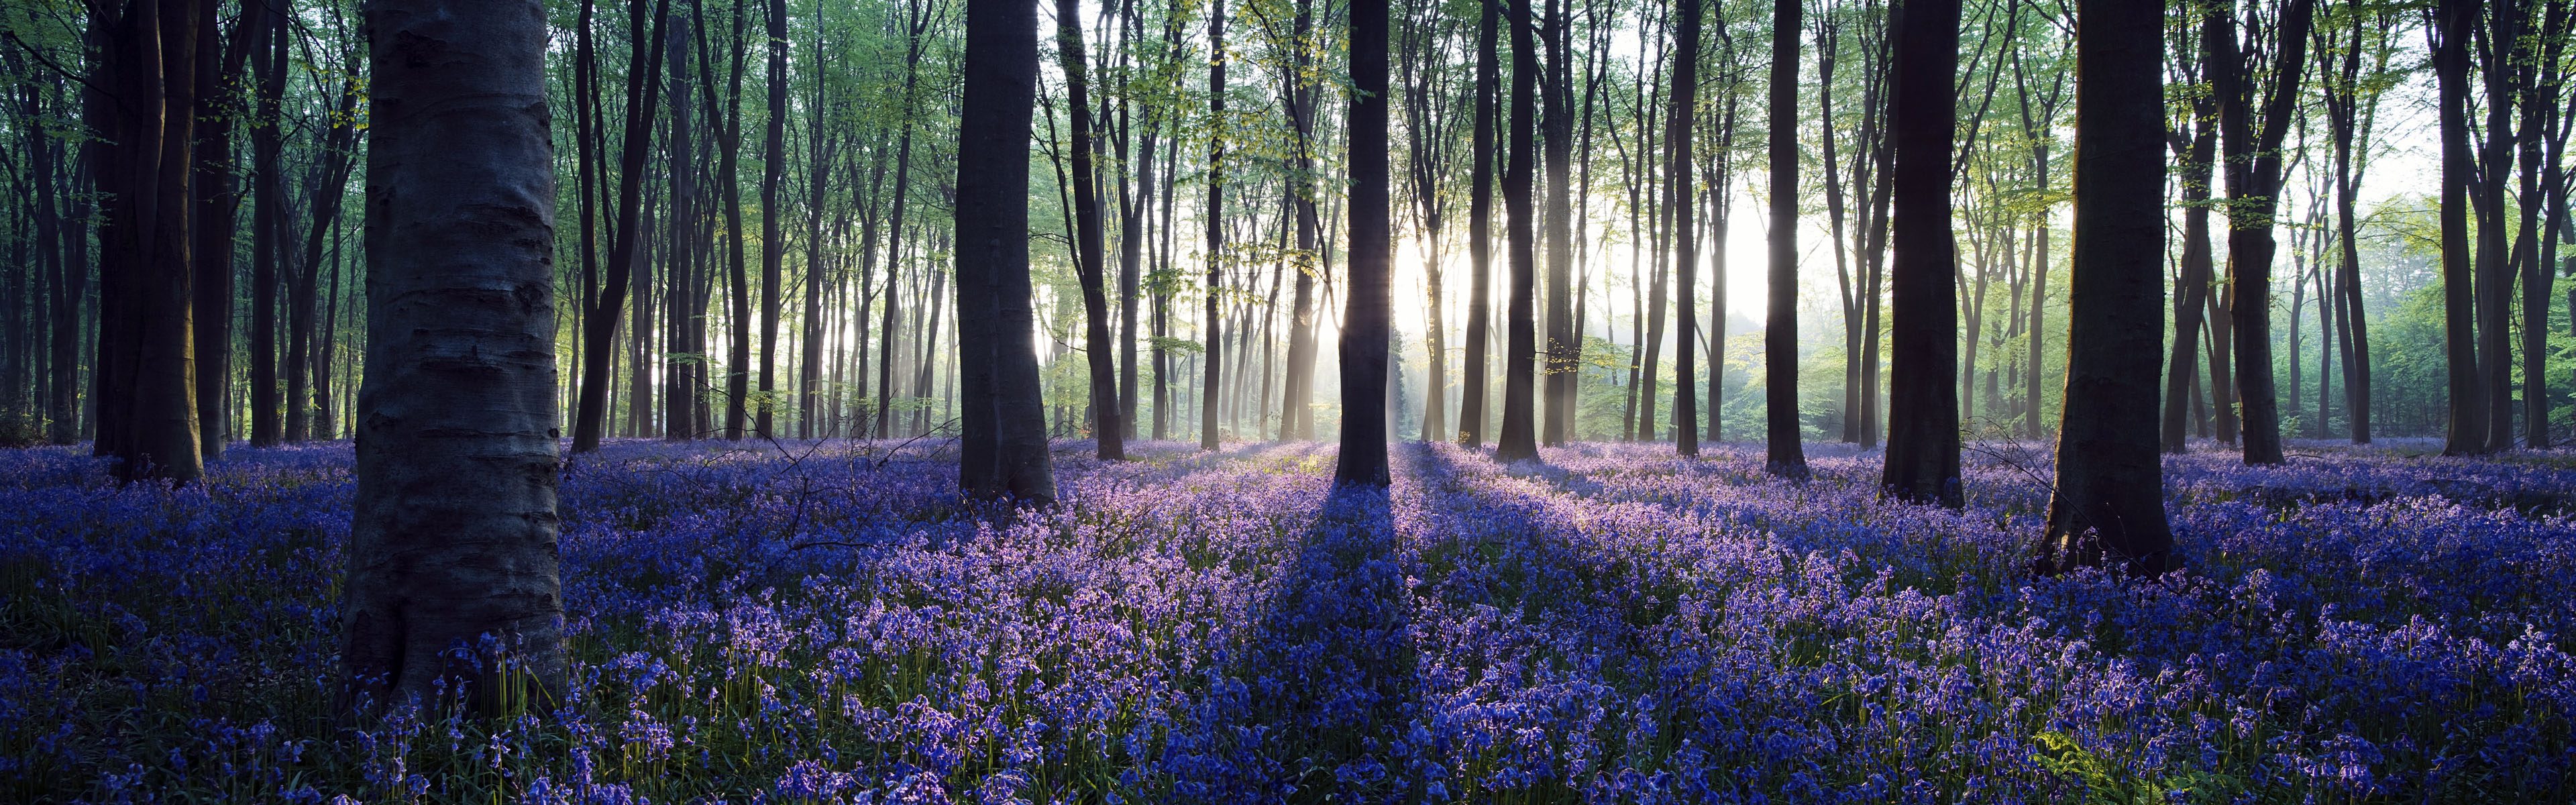 Dawn in bluebell woodland (Hyacinthoides non-scripta), Hampshire, England, U.K.